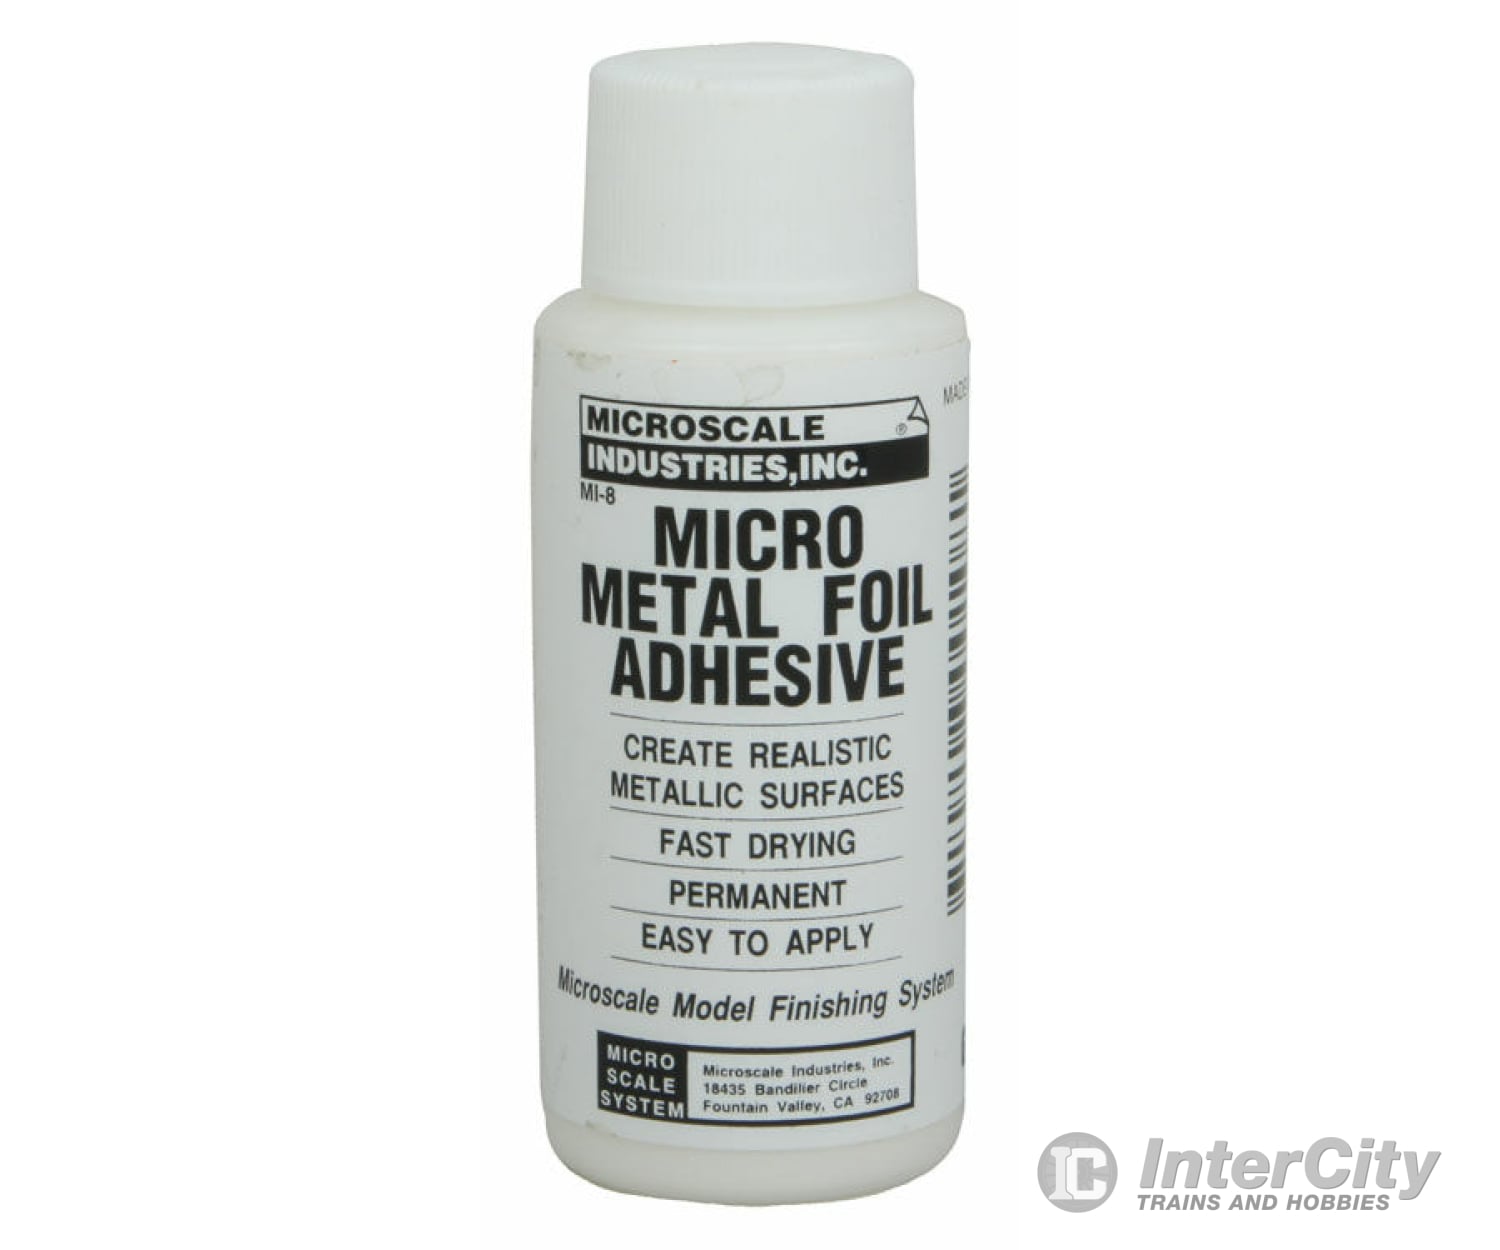 Microscale 116 Micro Metal Foil Adhesive Glues & Adhesives